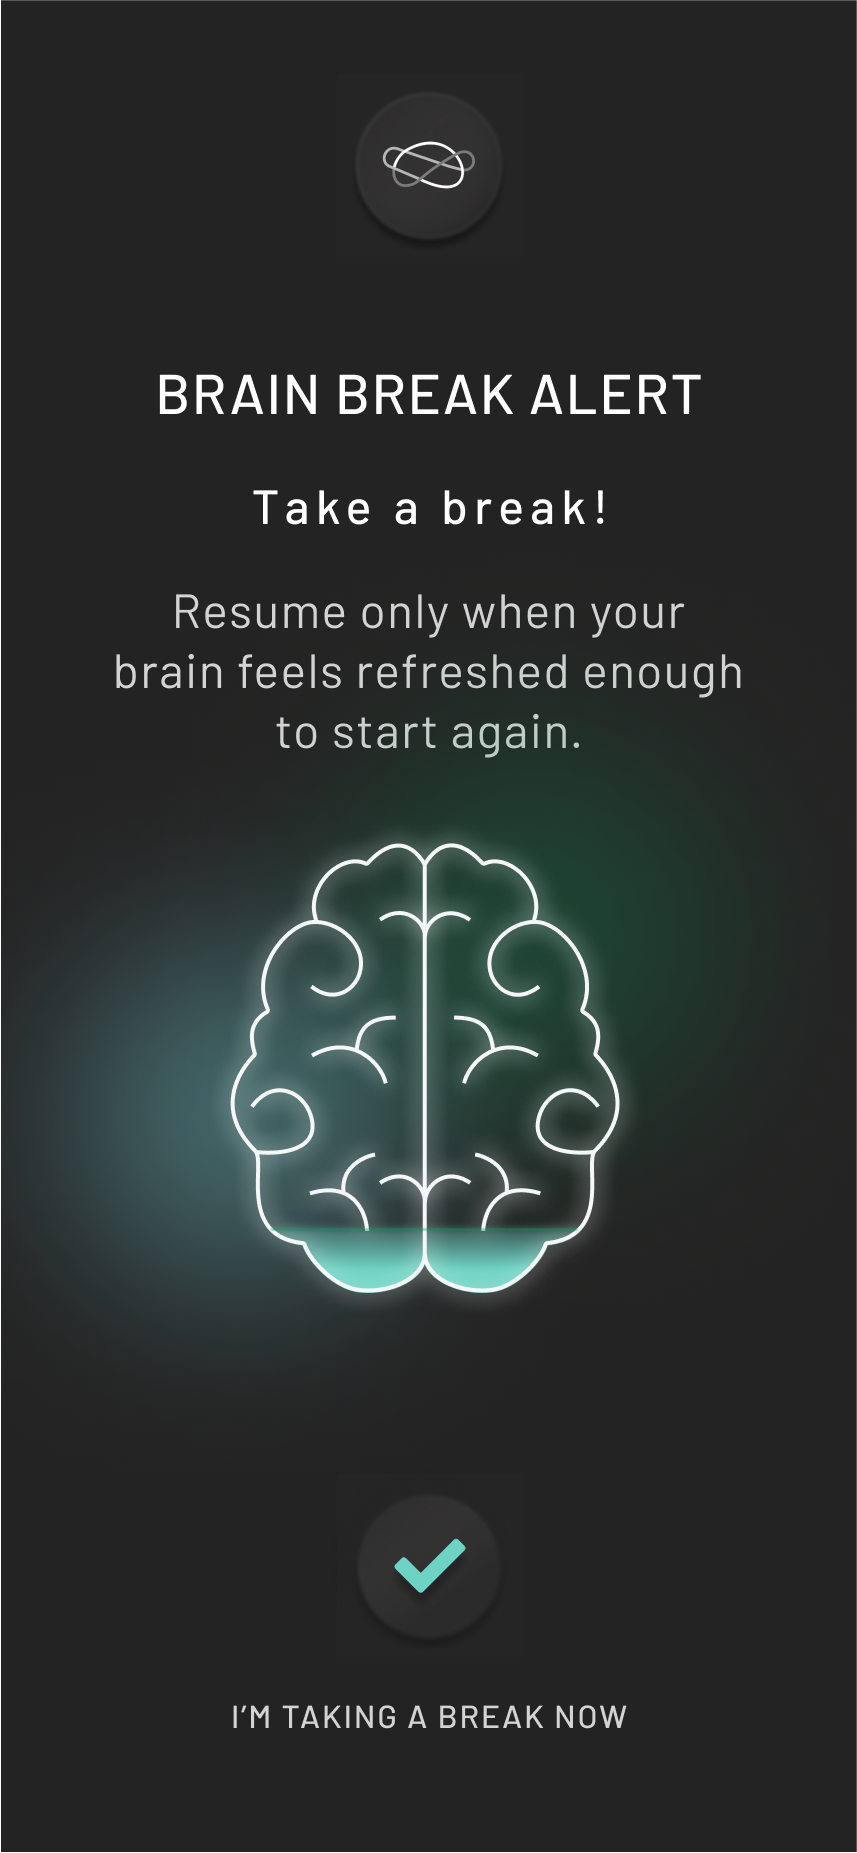 Neurovine App Brain Break Alert